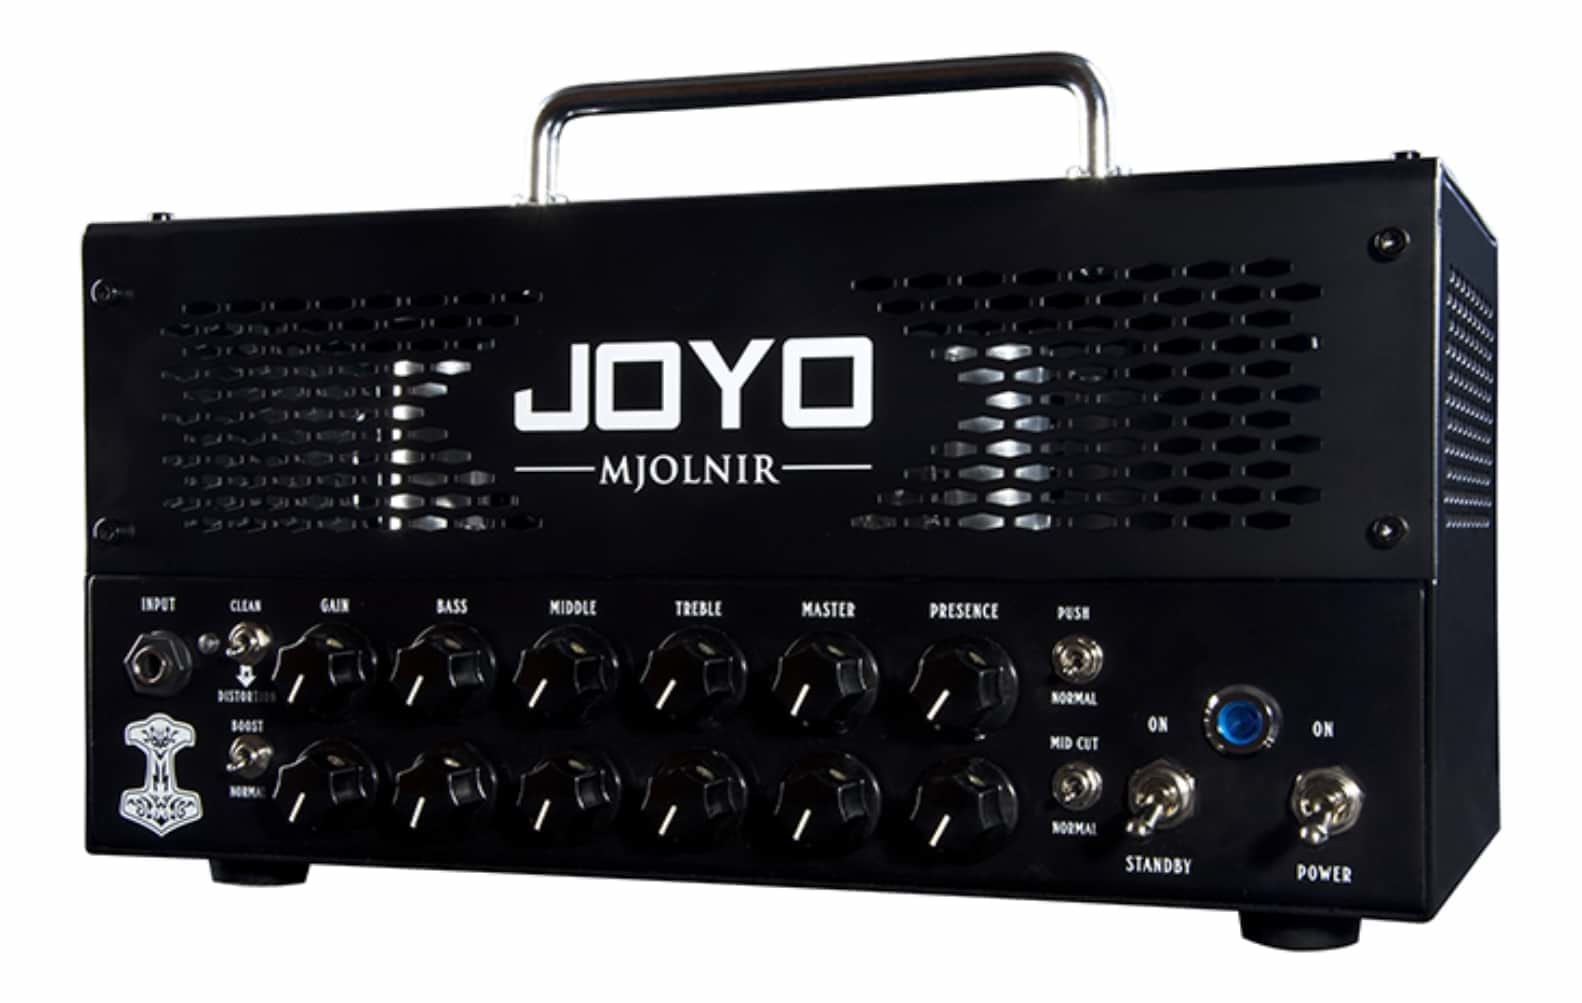 JOYO JF 14 American sound (Amplifier Simulator), electric